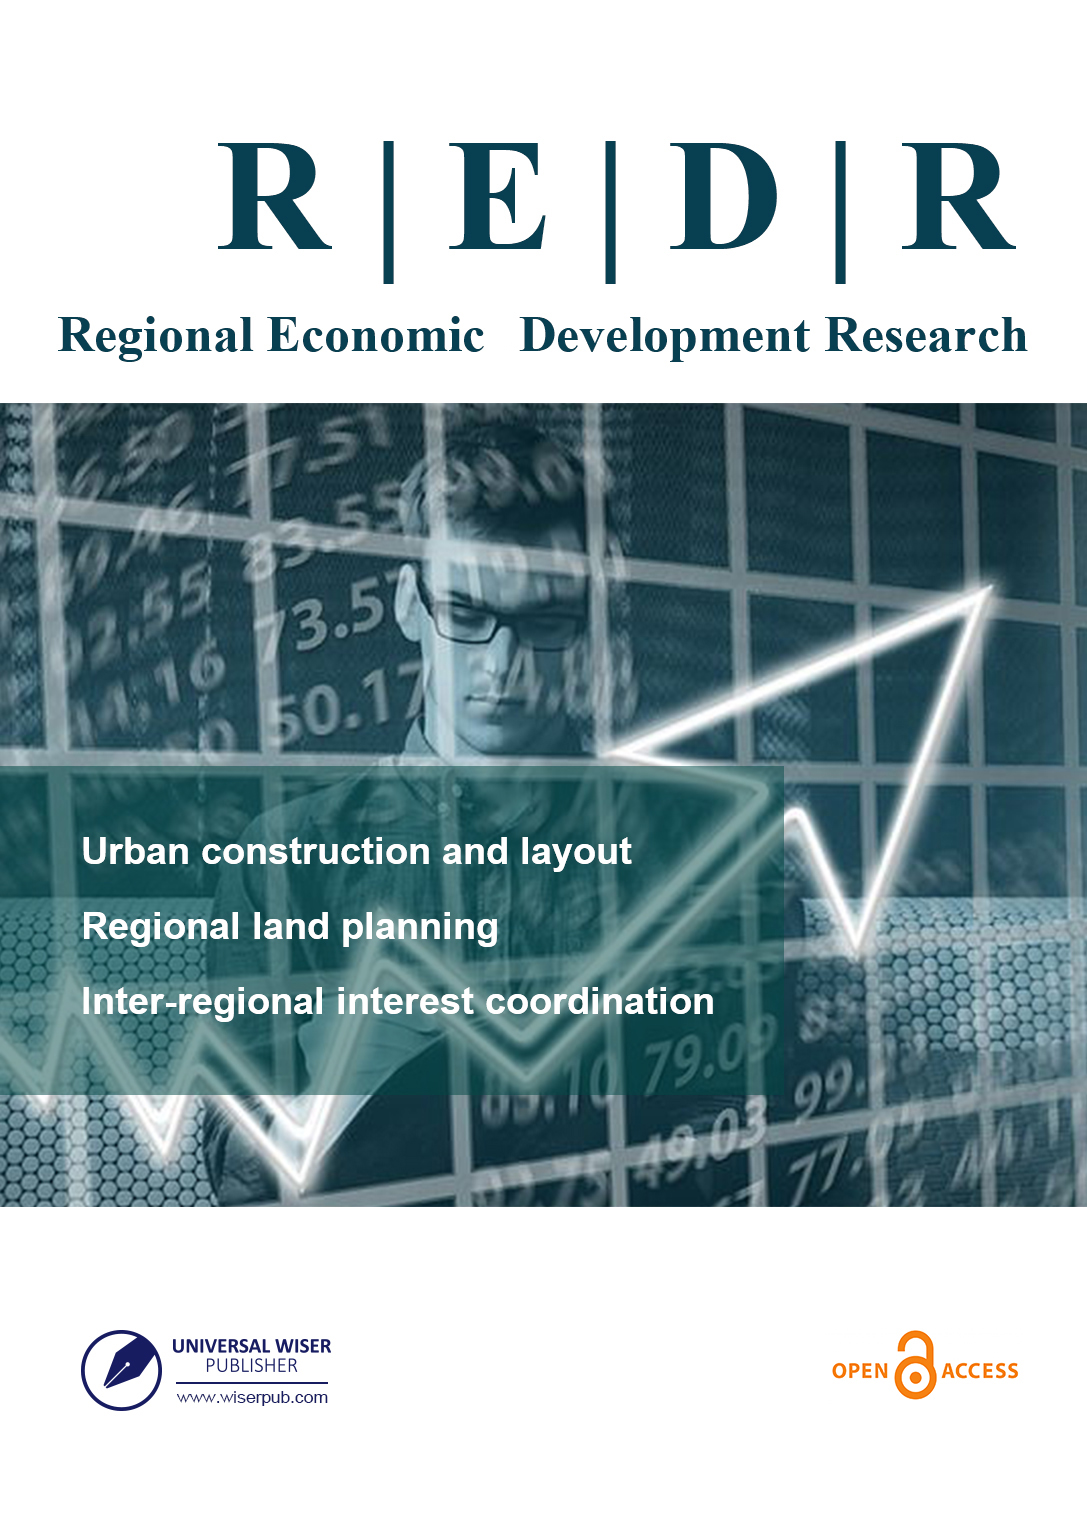 economic development research